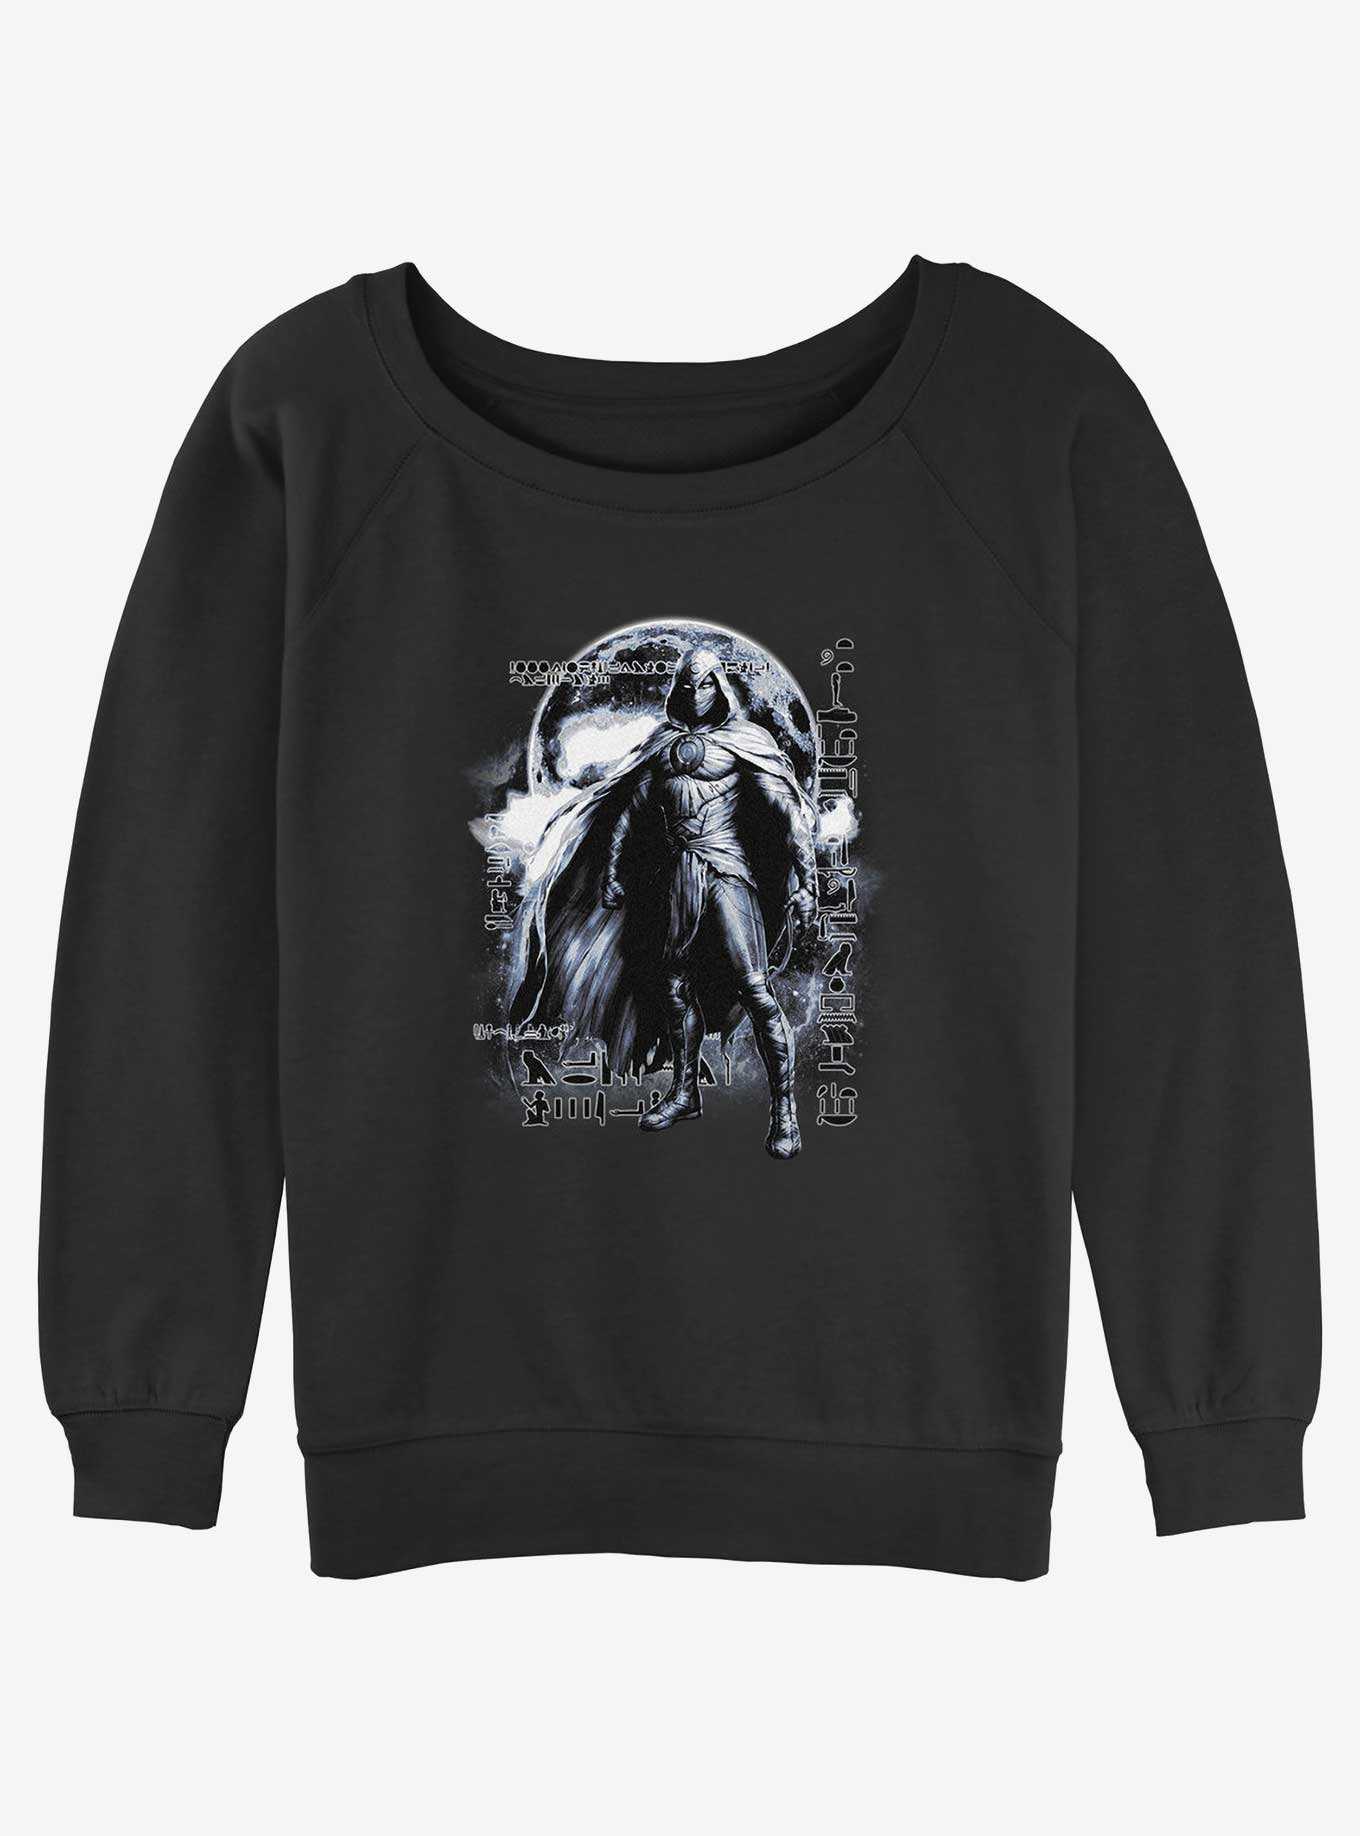 Marvel Moon Knight Dark Knight Girls Slouchy Sweatshirt, , hi-res